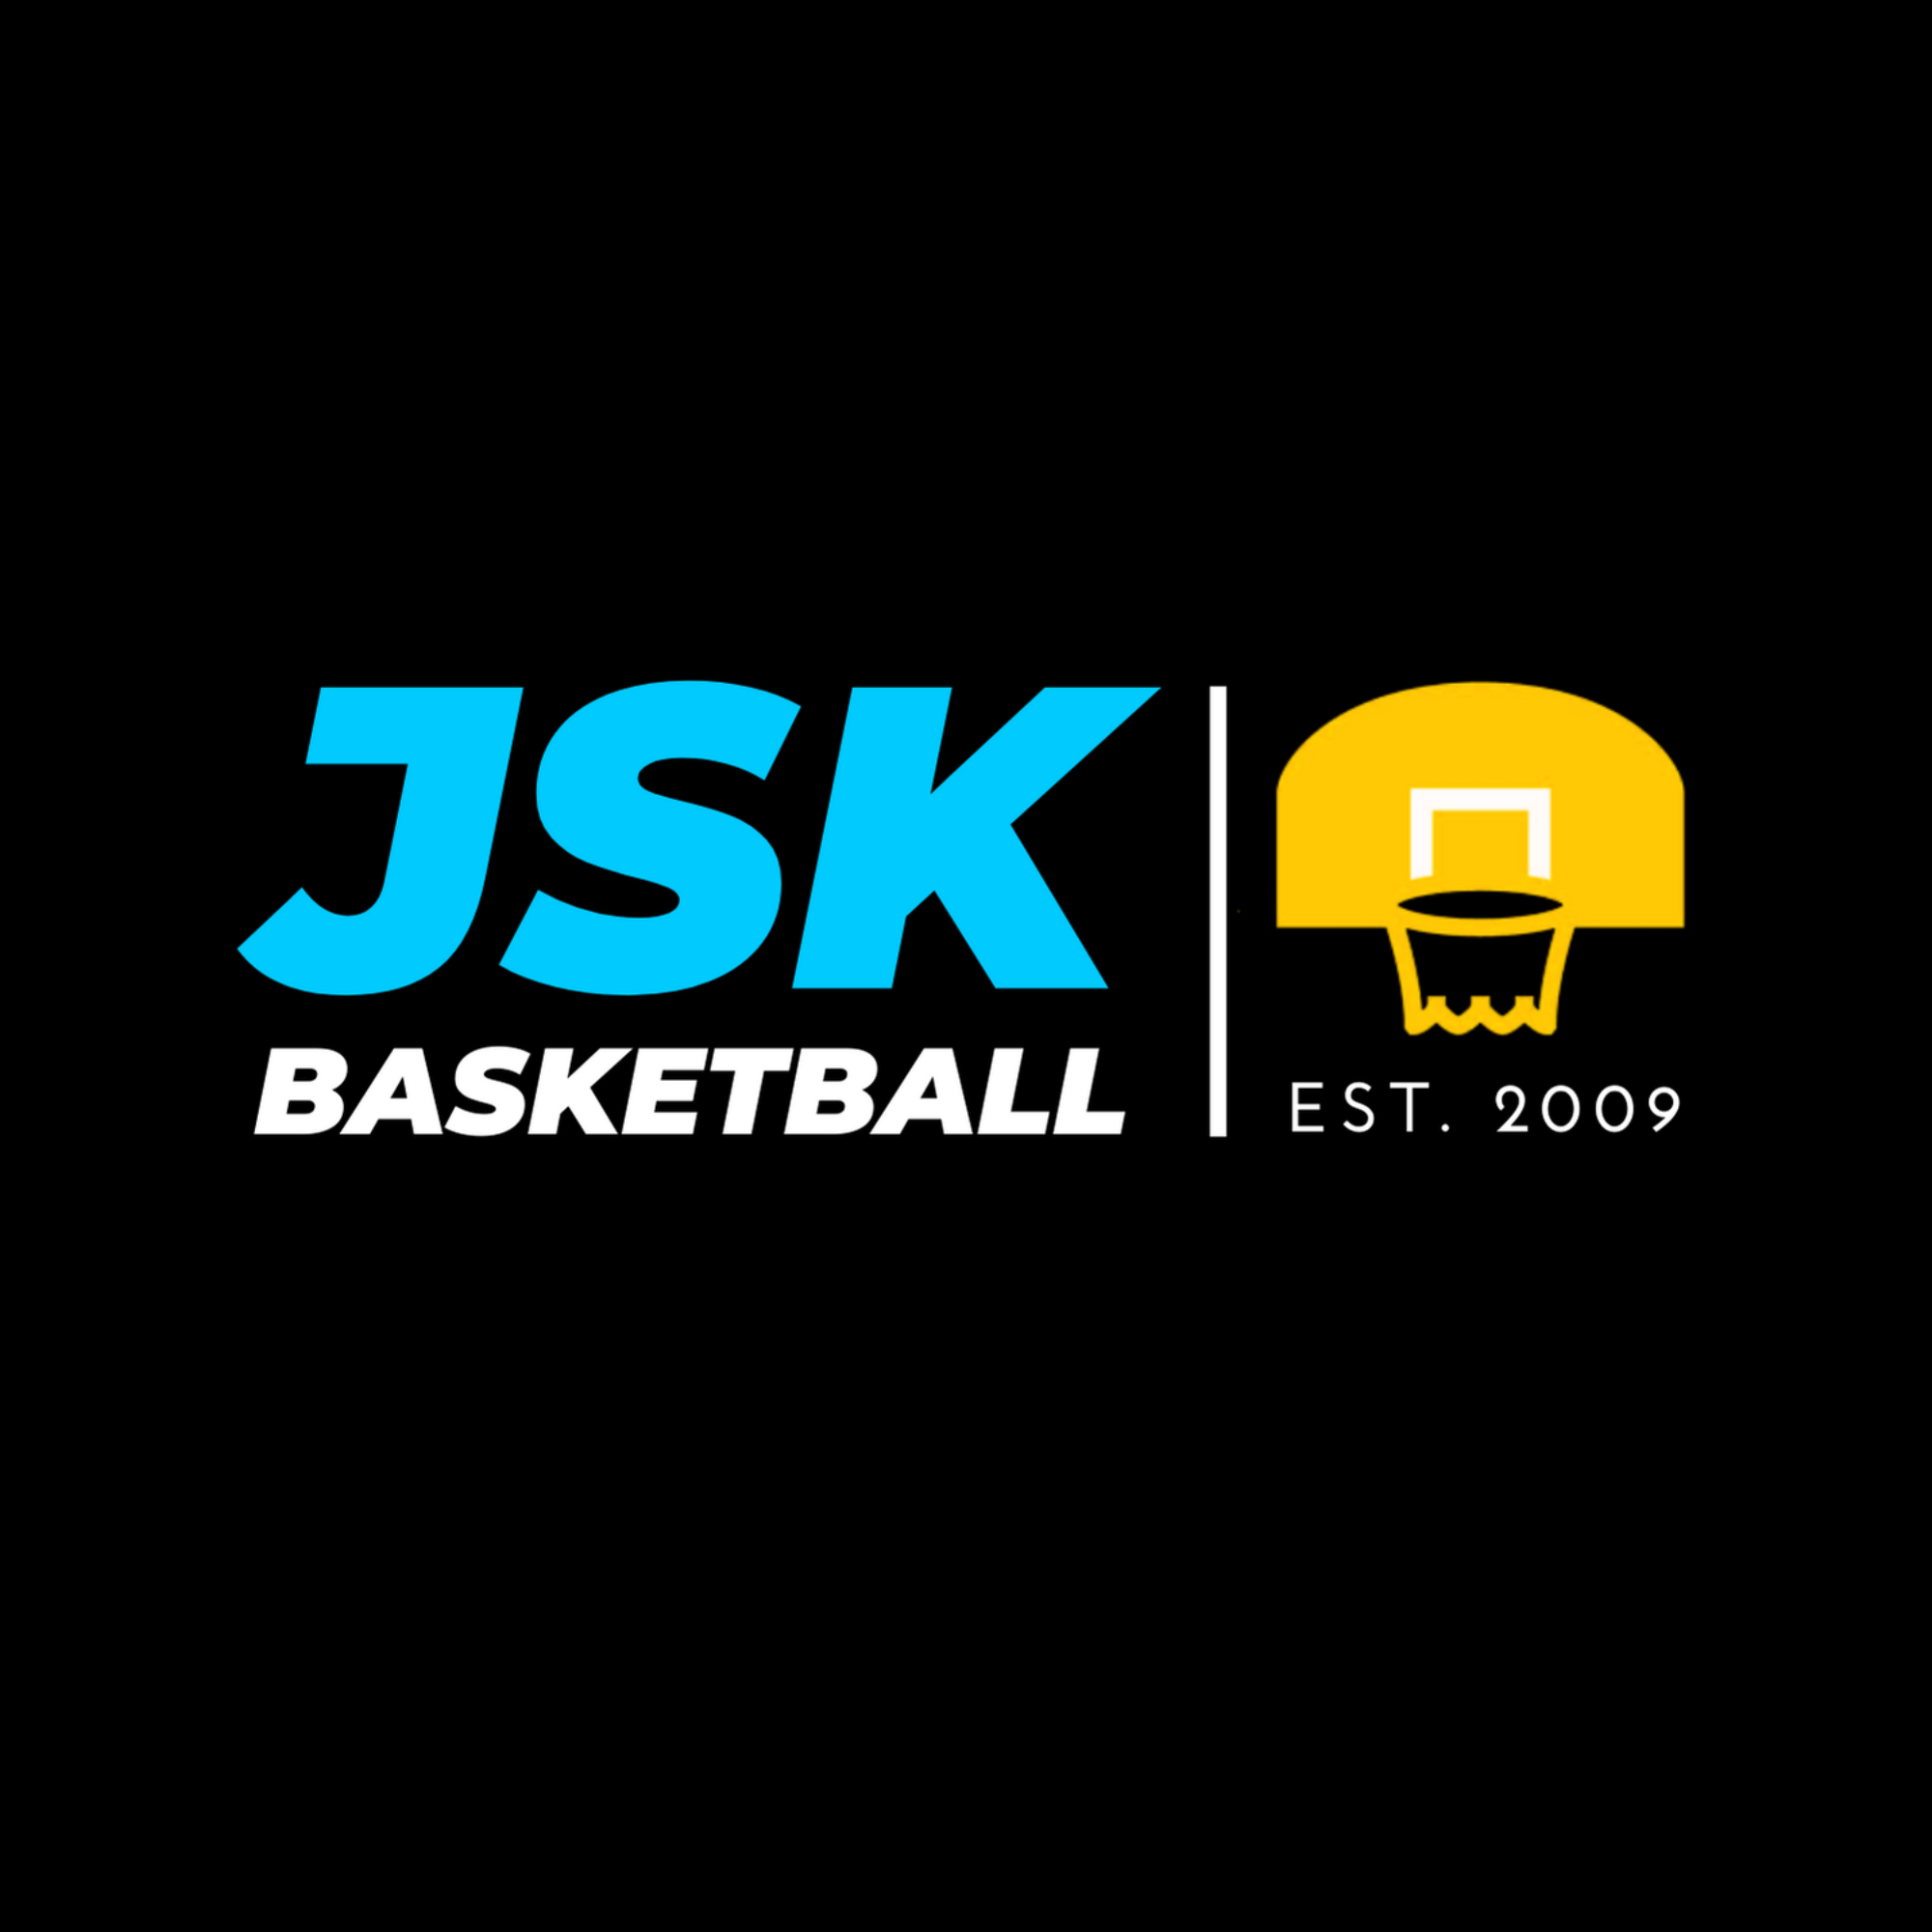 The official logo of JSK Basketball